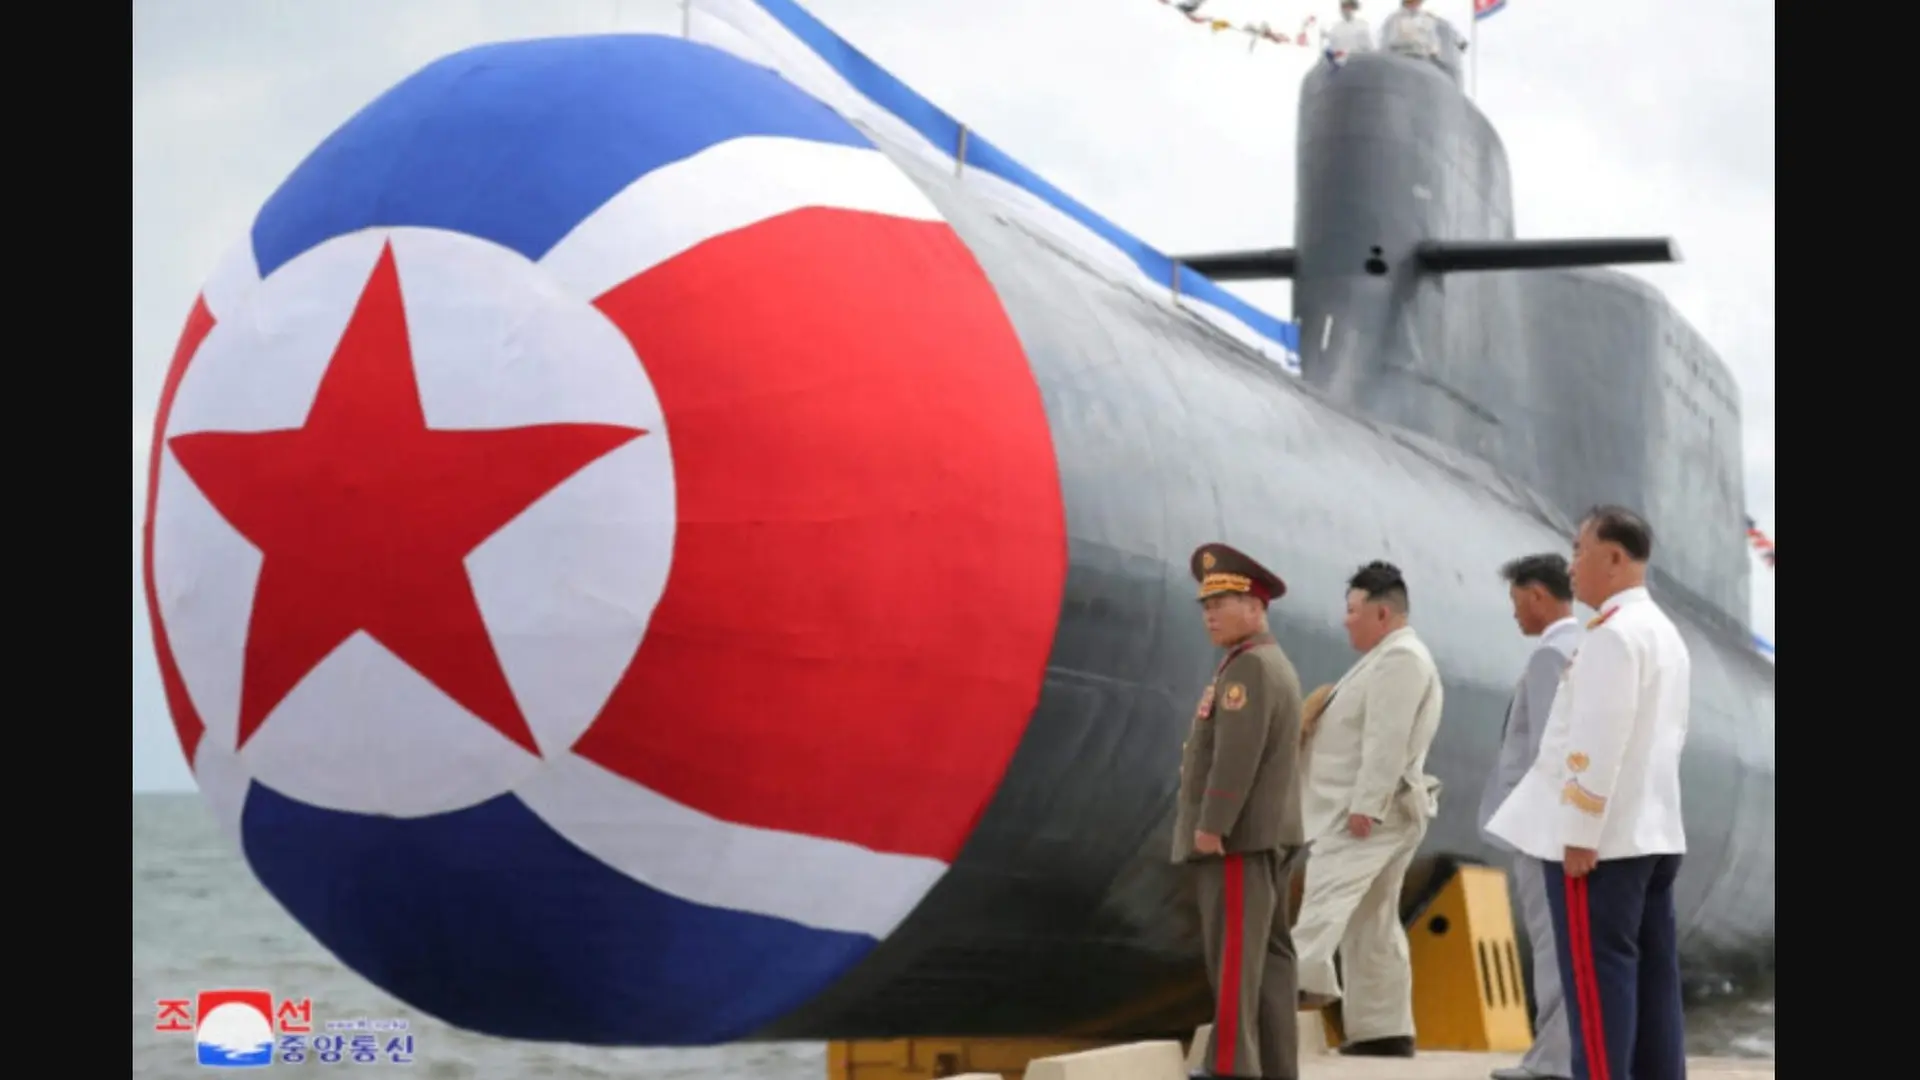 podmornica_SjevernaKoreja_foto_KCNA_REUTERS Cropped-64fac2c8dffb9.webp